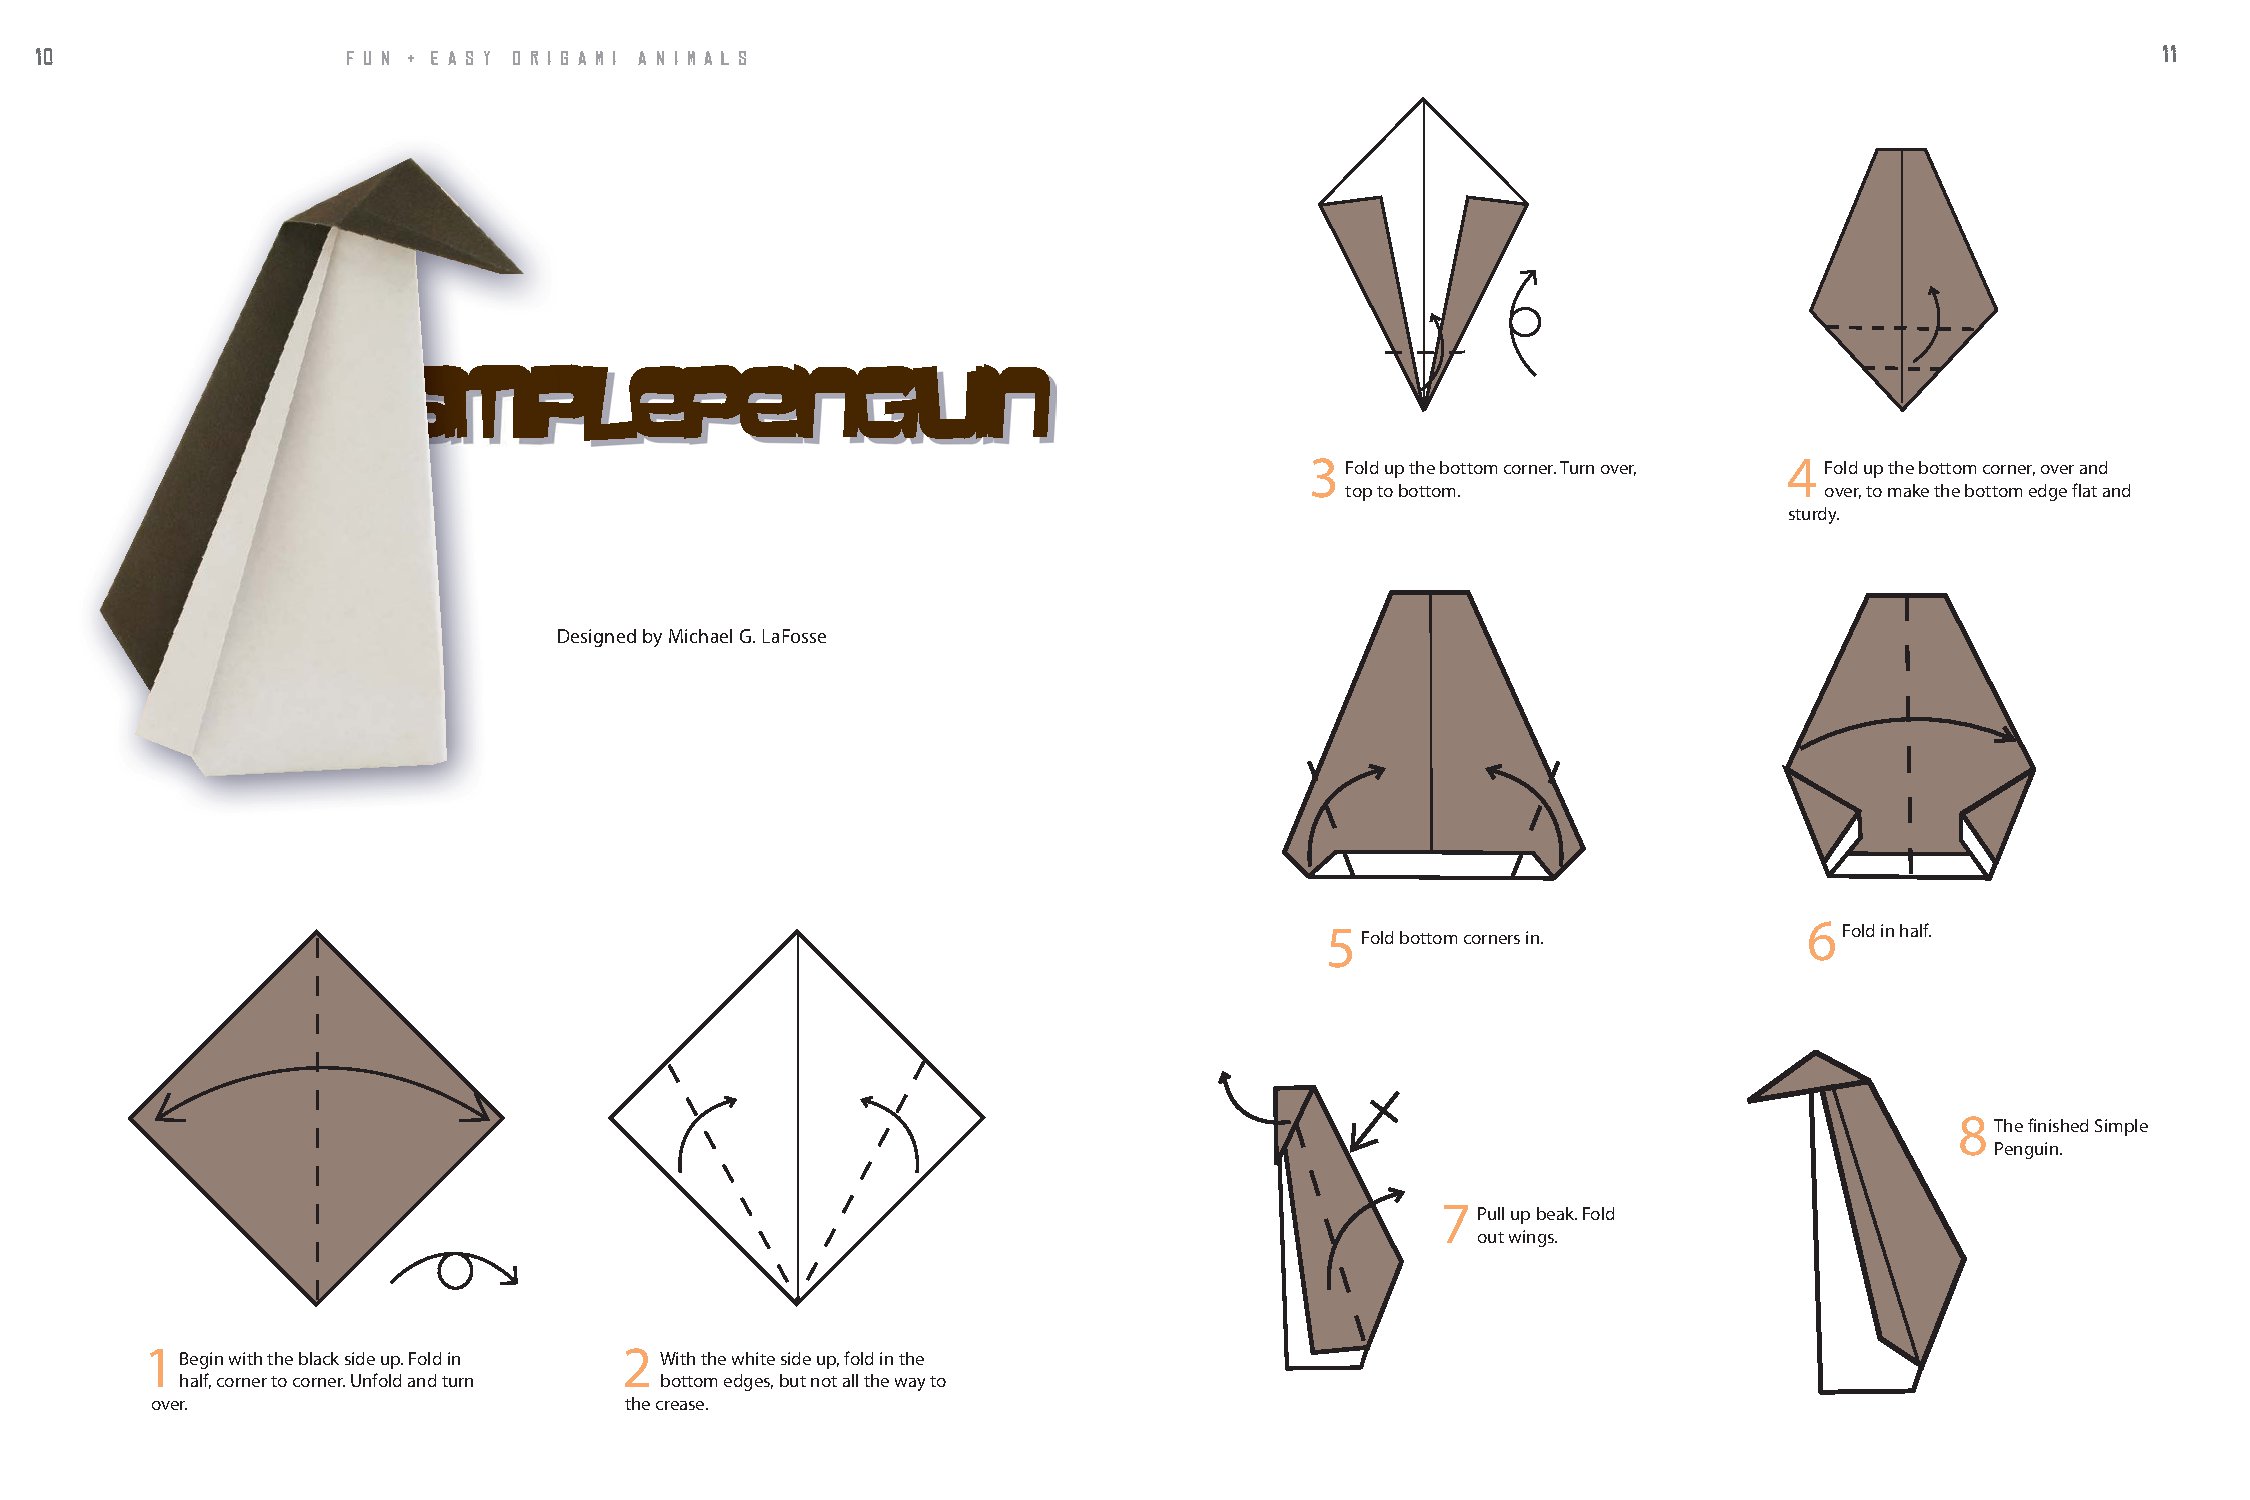 Fun & Easy Origami Animals